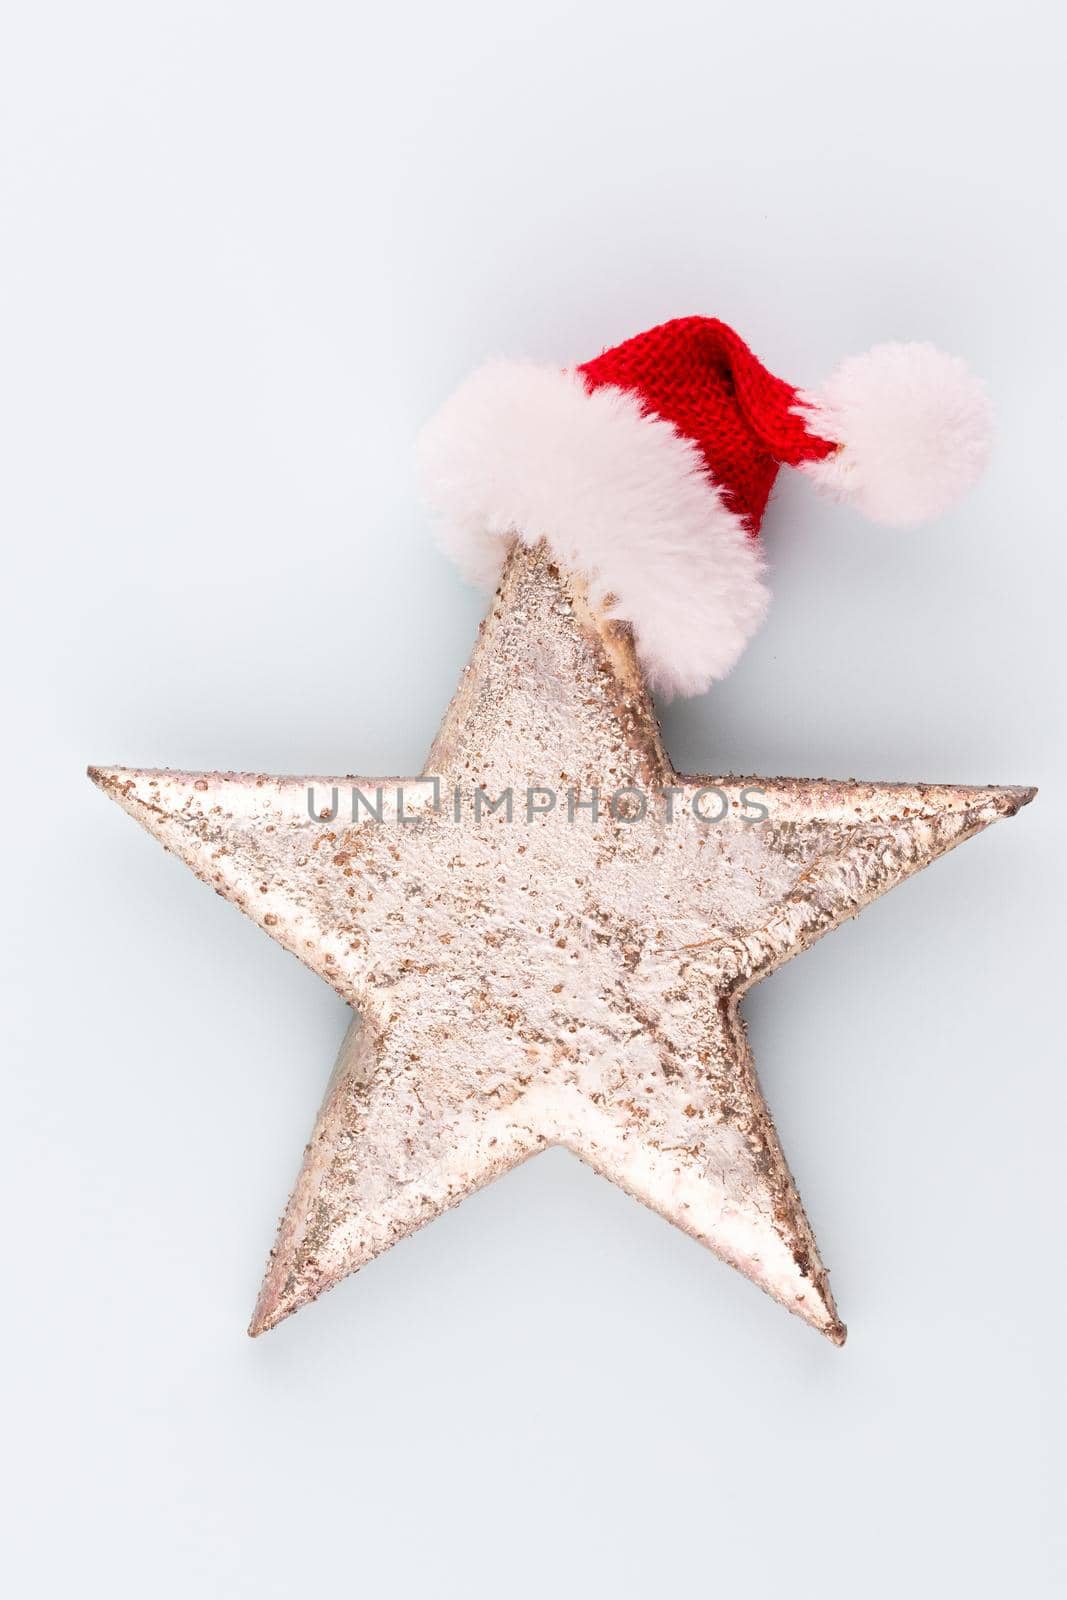 Christmas star decoration. Christmas star on blue background.